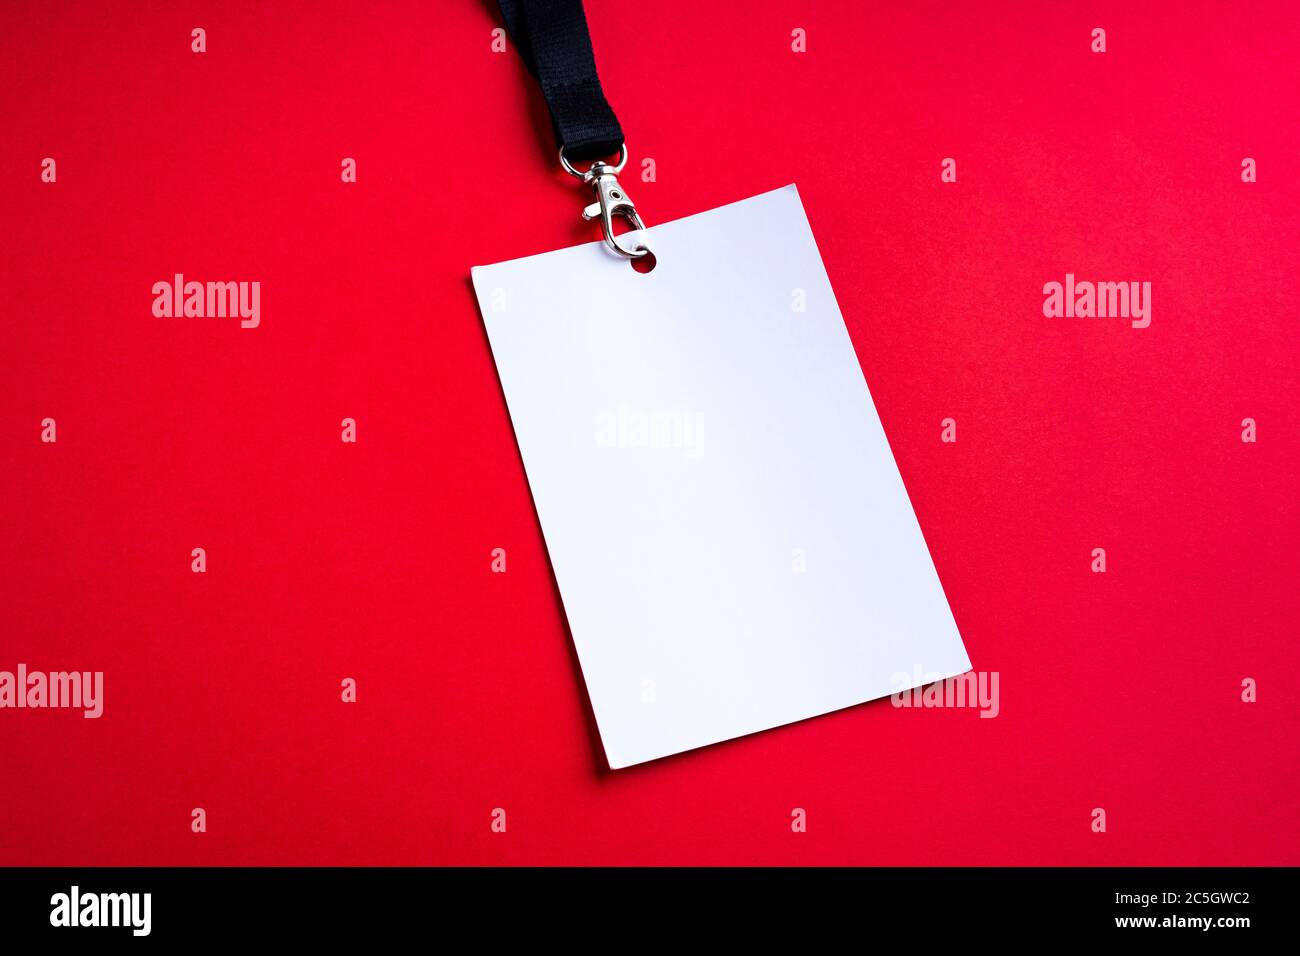 Blank white paper bagde on red background, lanyard mockup Stock Photo